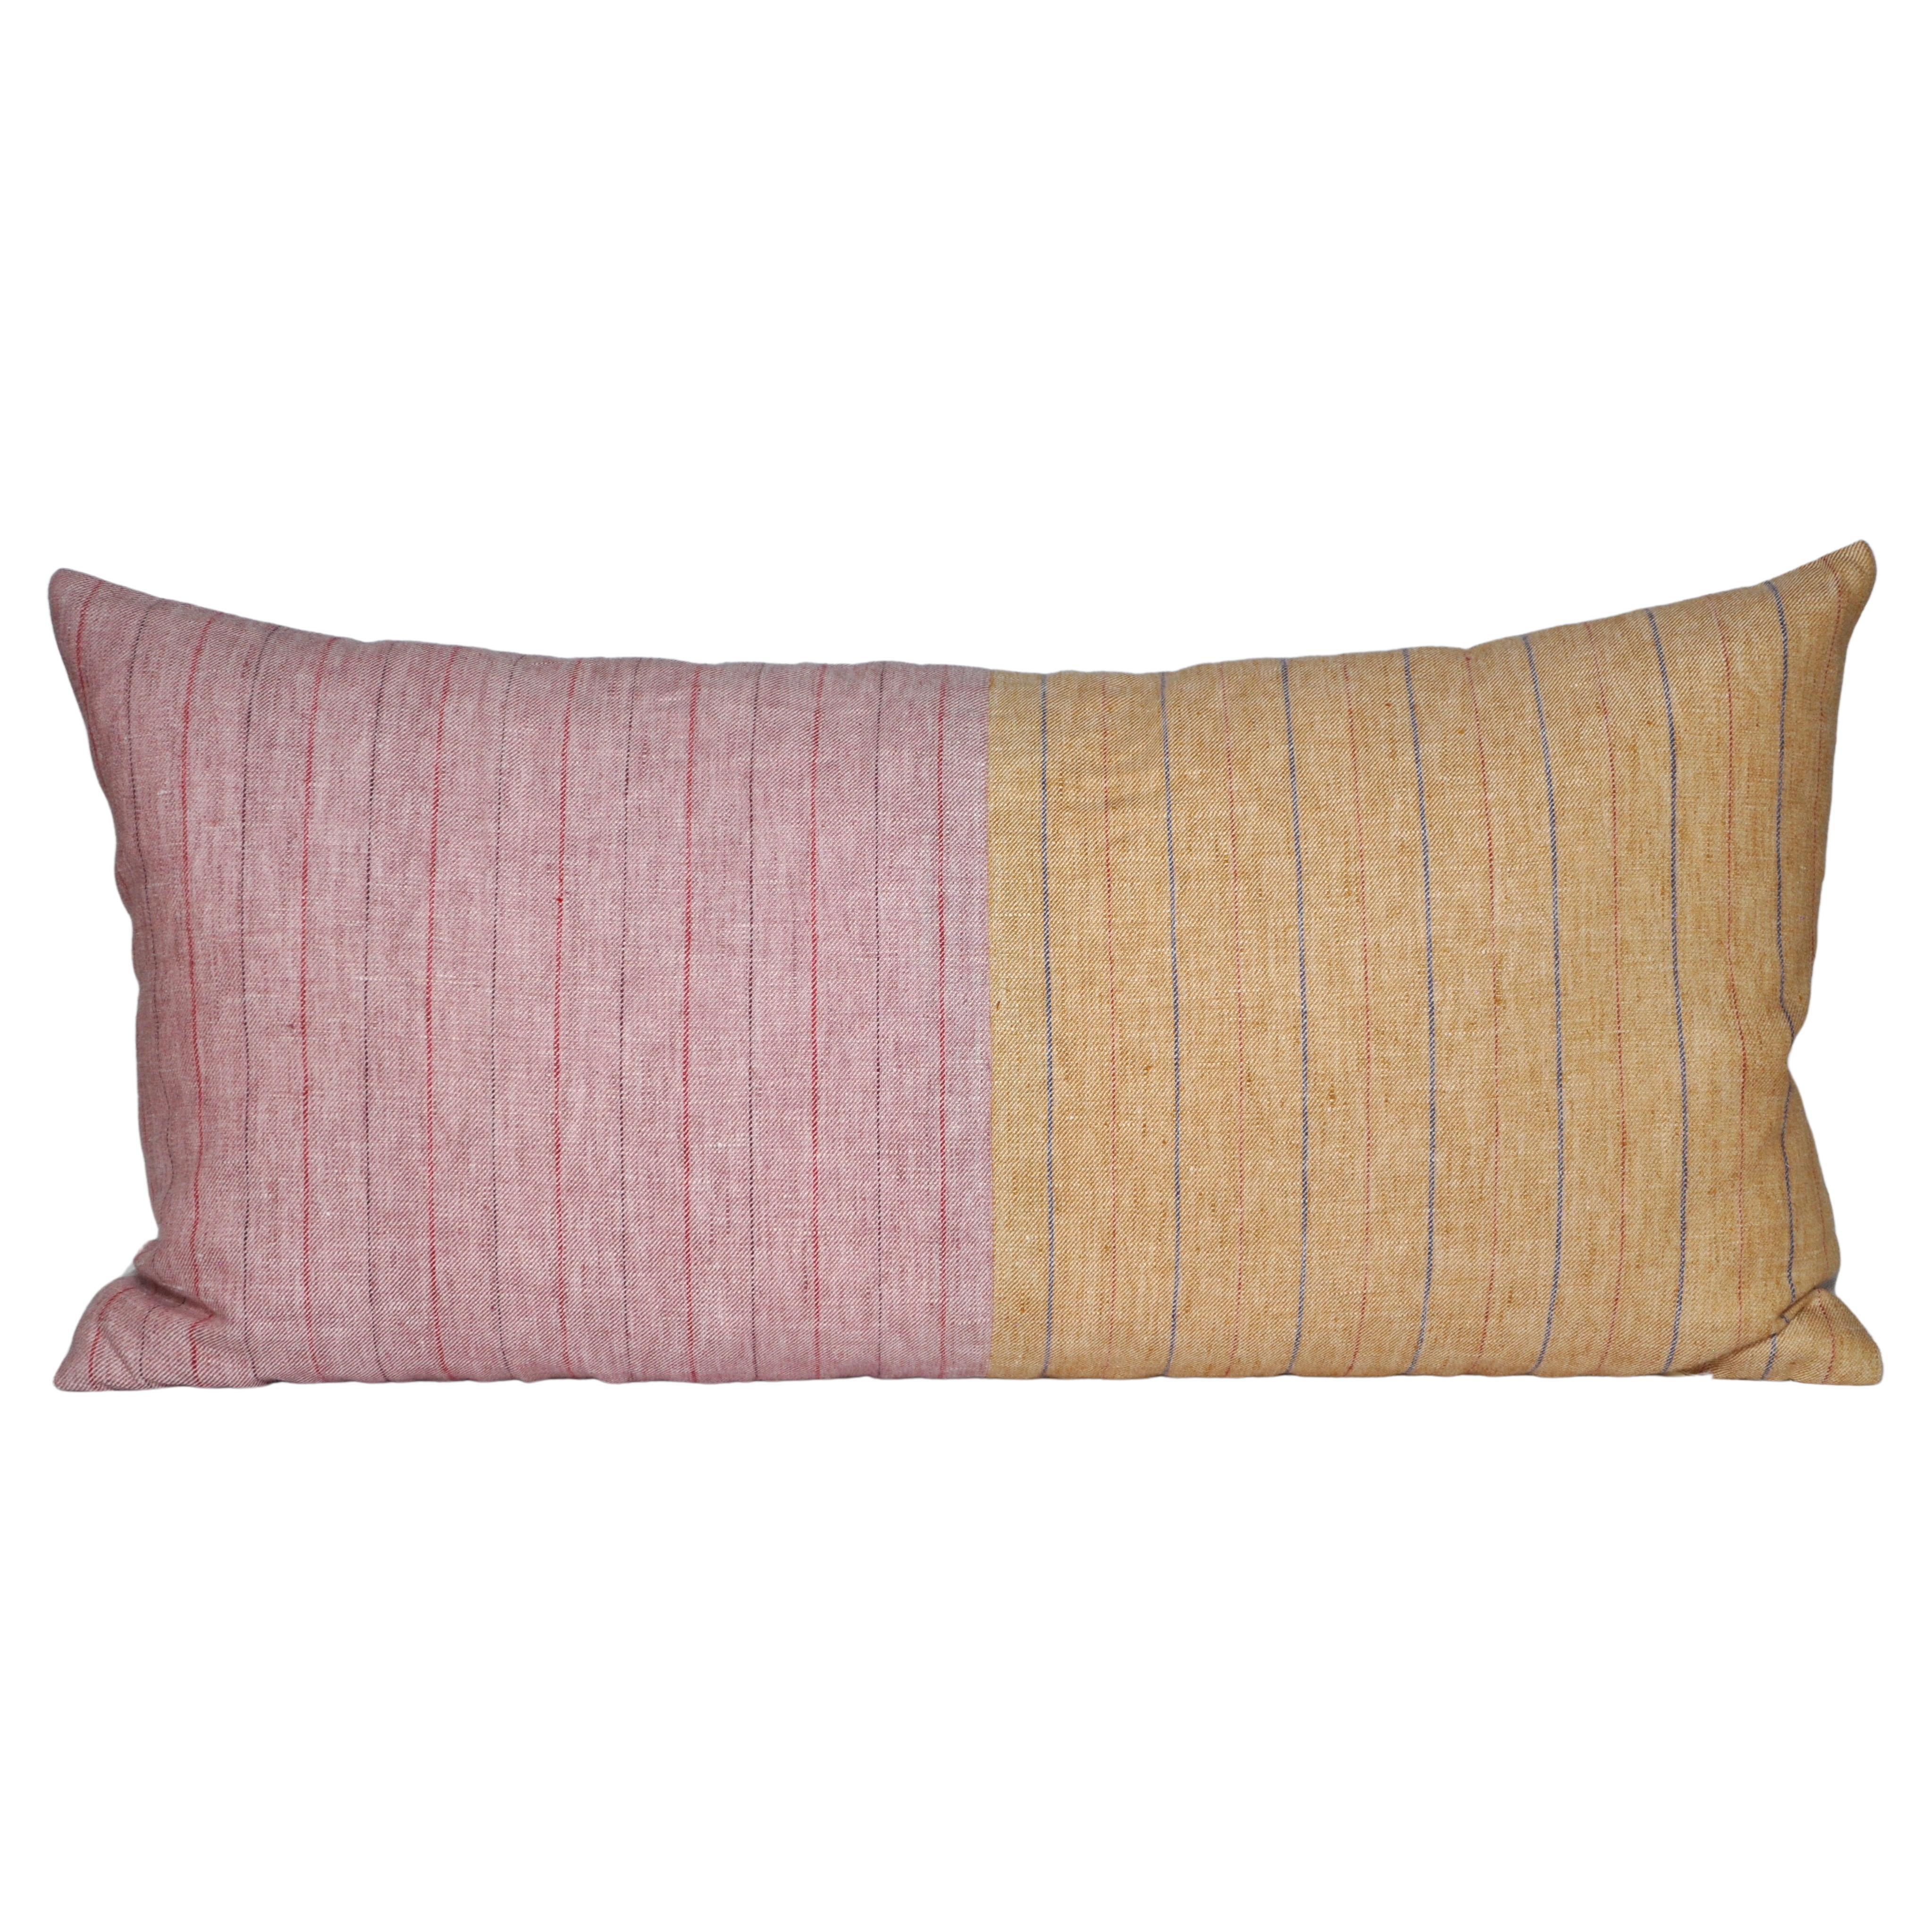 Luxury Handwoven Irish Linen Pillow Gold Yellow Pink Stripes Cushion (Coussin en lin irlandais tissé à la main)